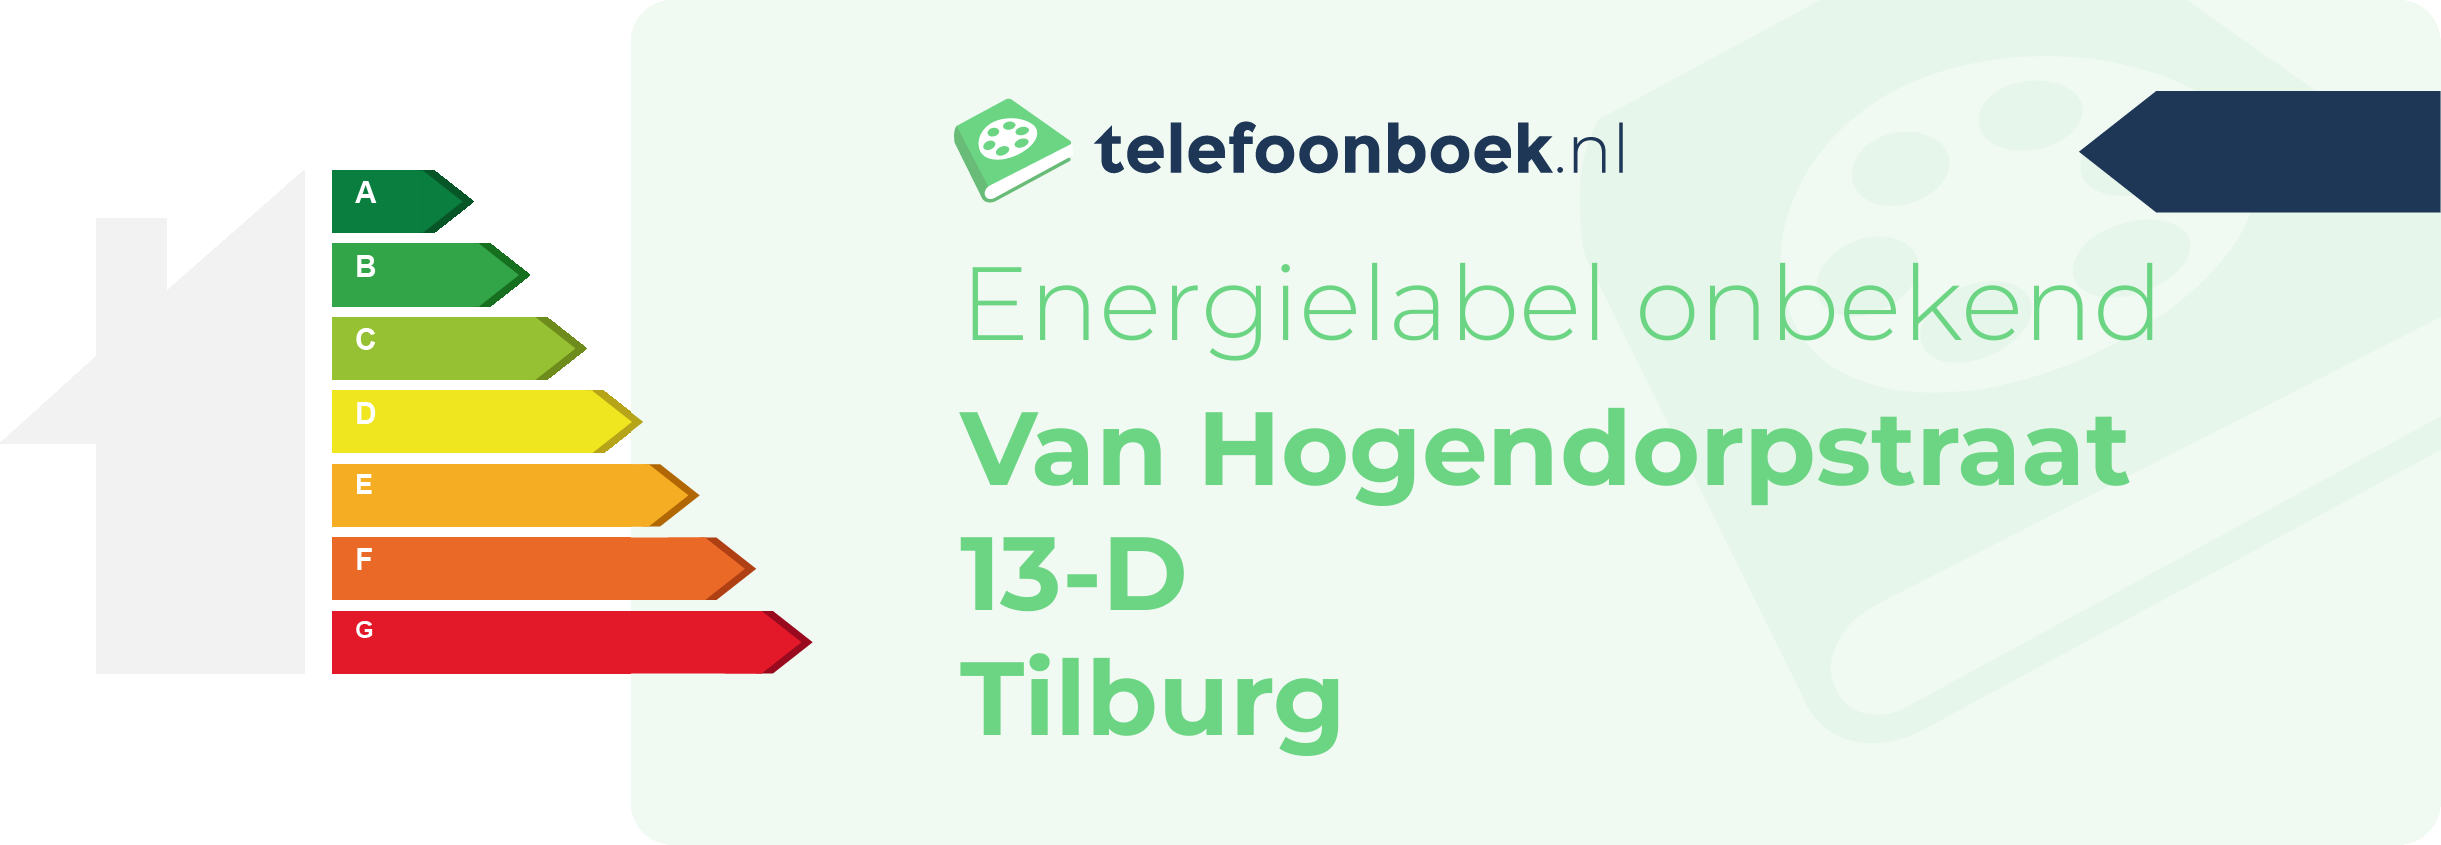 Energielabel Van Hogendorpstraat 13-D Tilburg